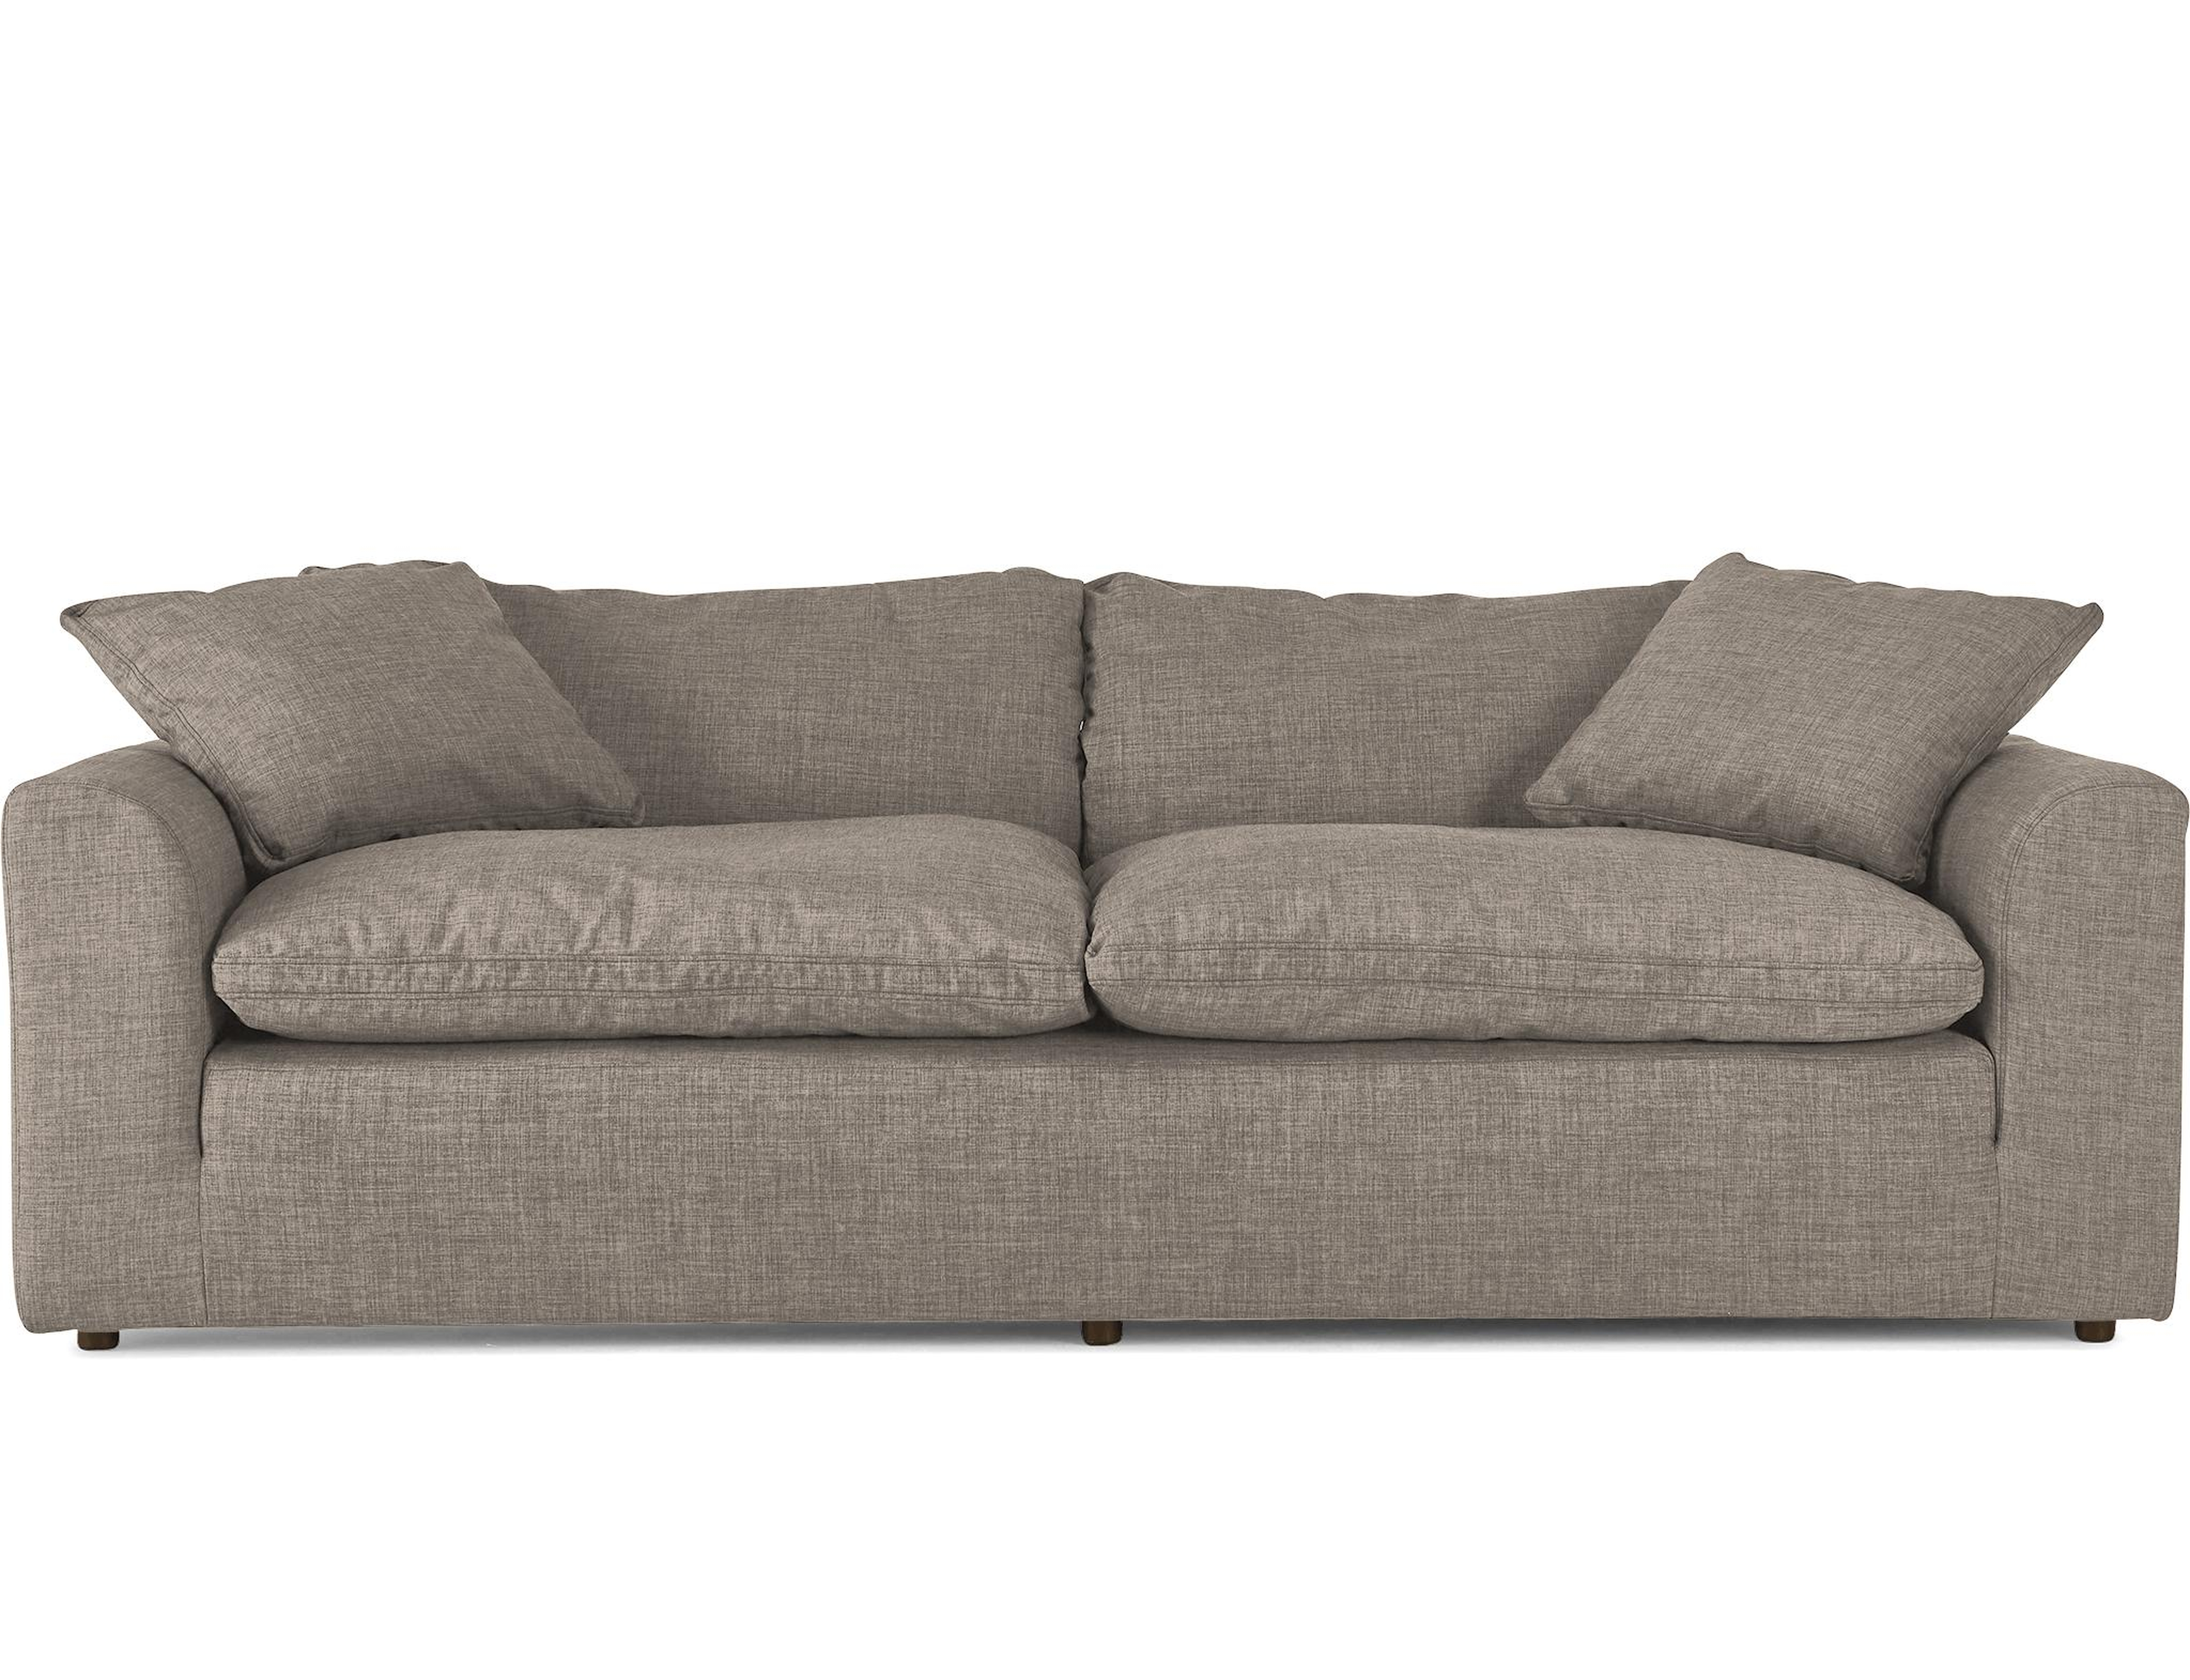 Gray Bryant Mid Century Modern Sofa - Prime Stone - Joybird